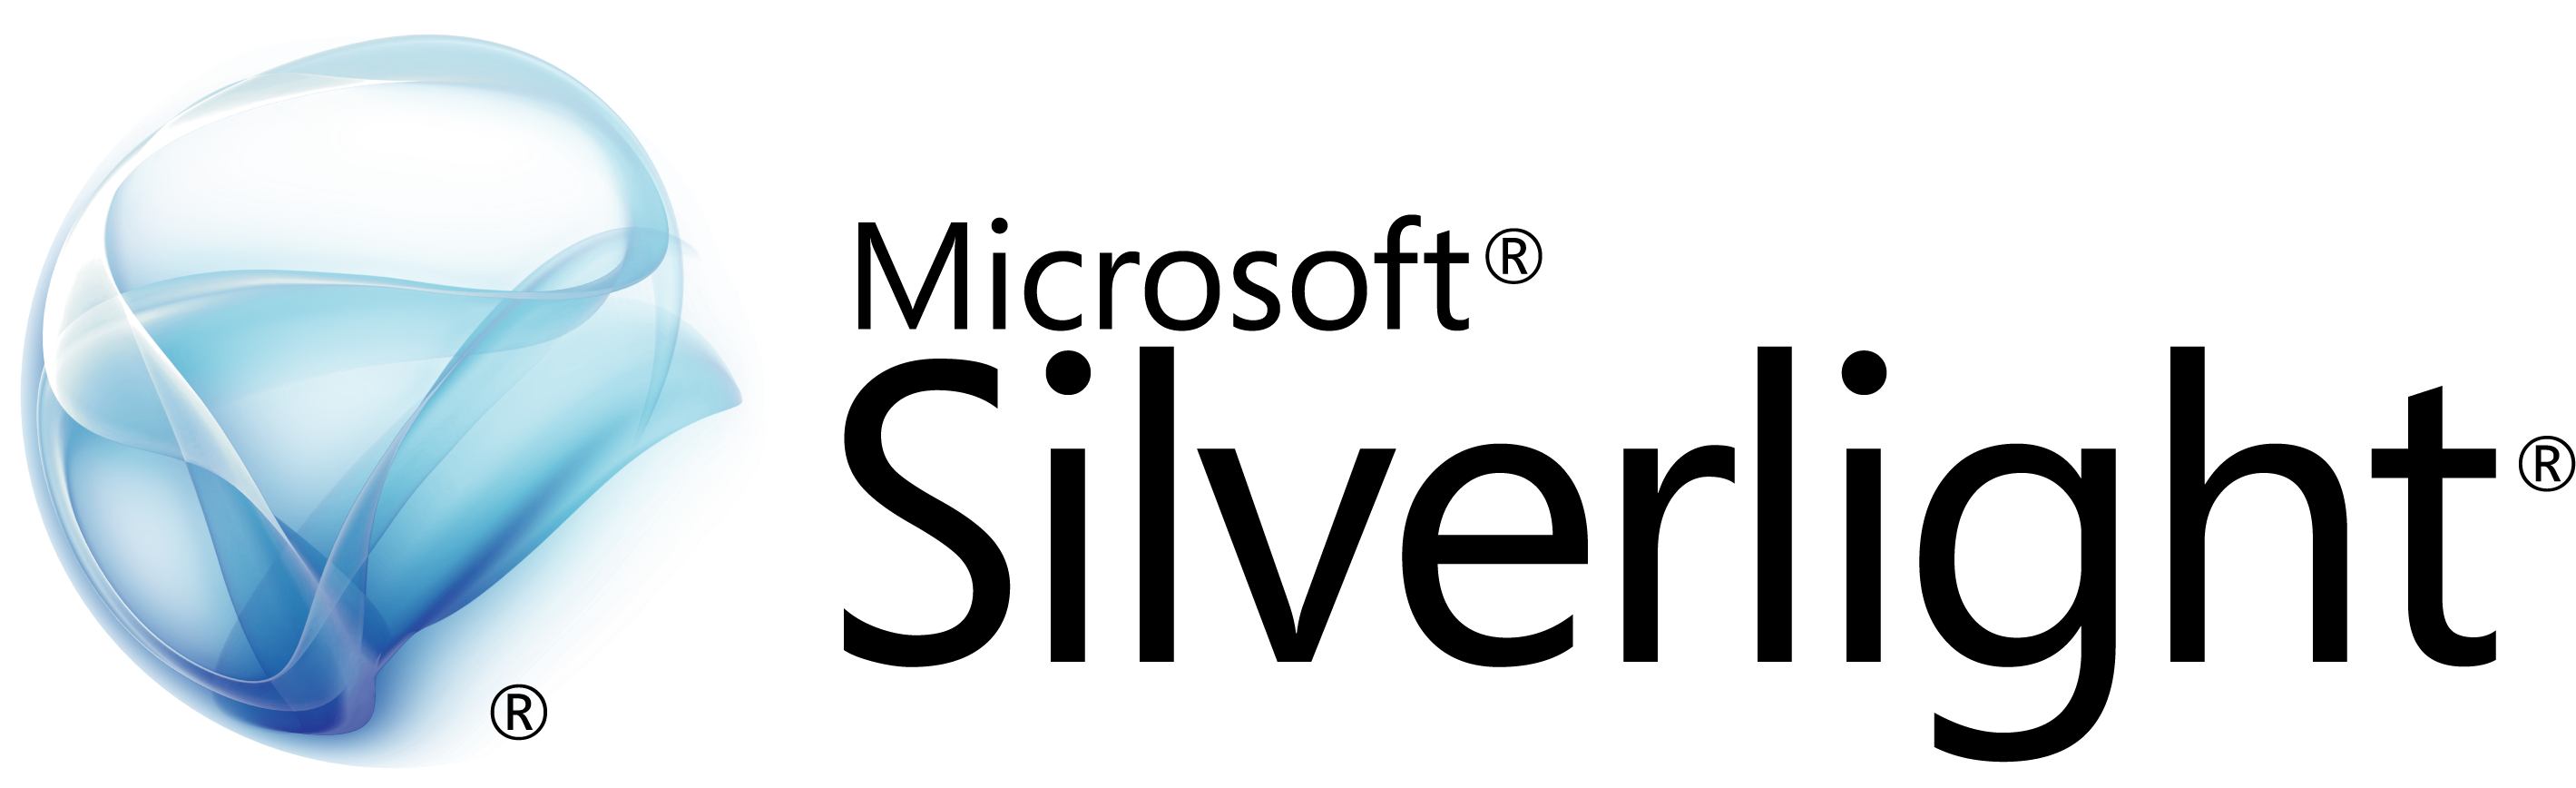 Silverlight logotyp